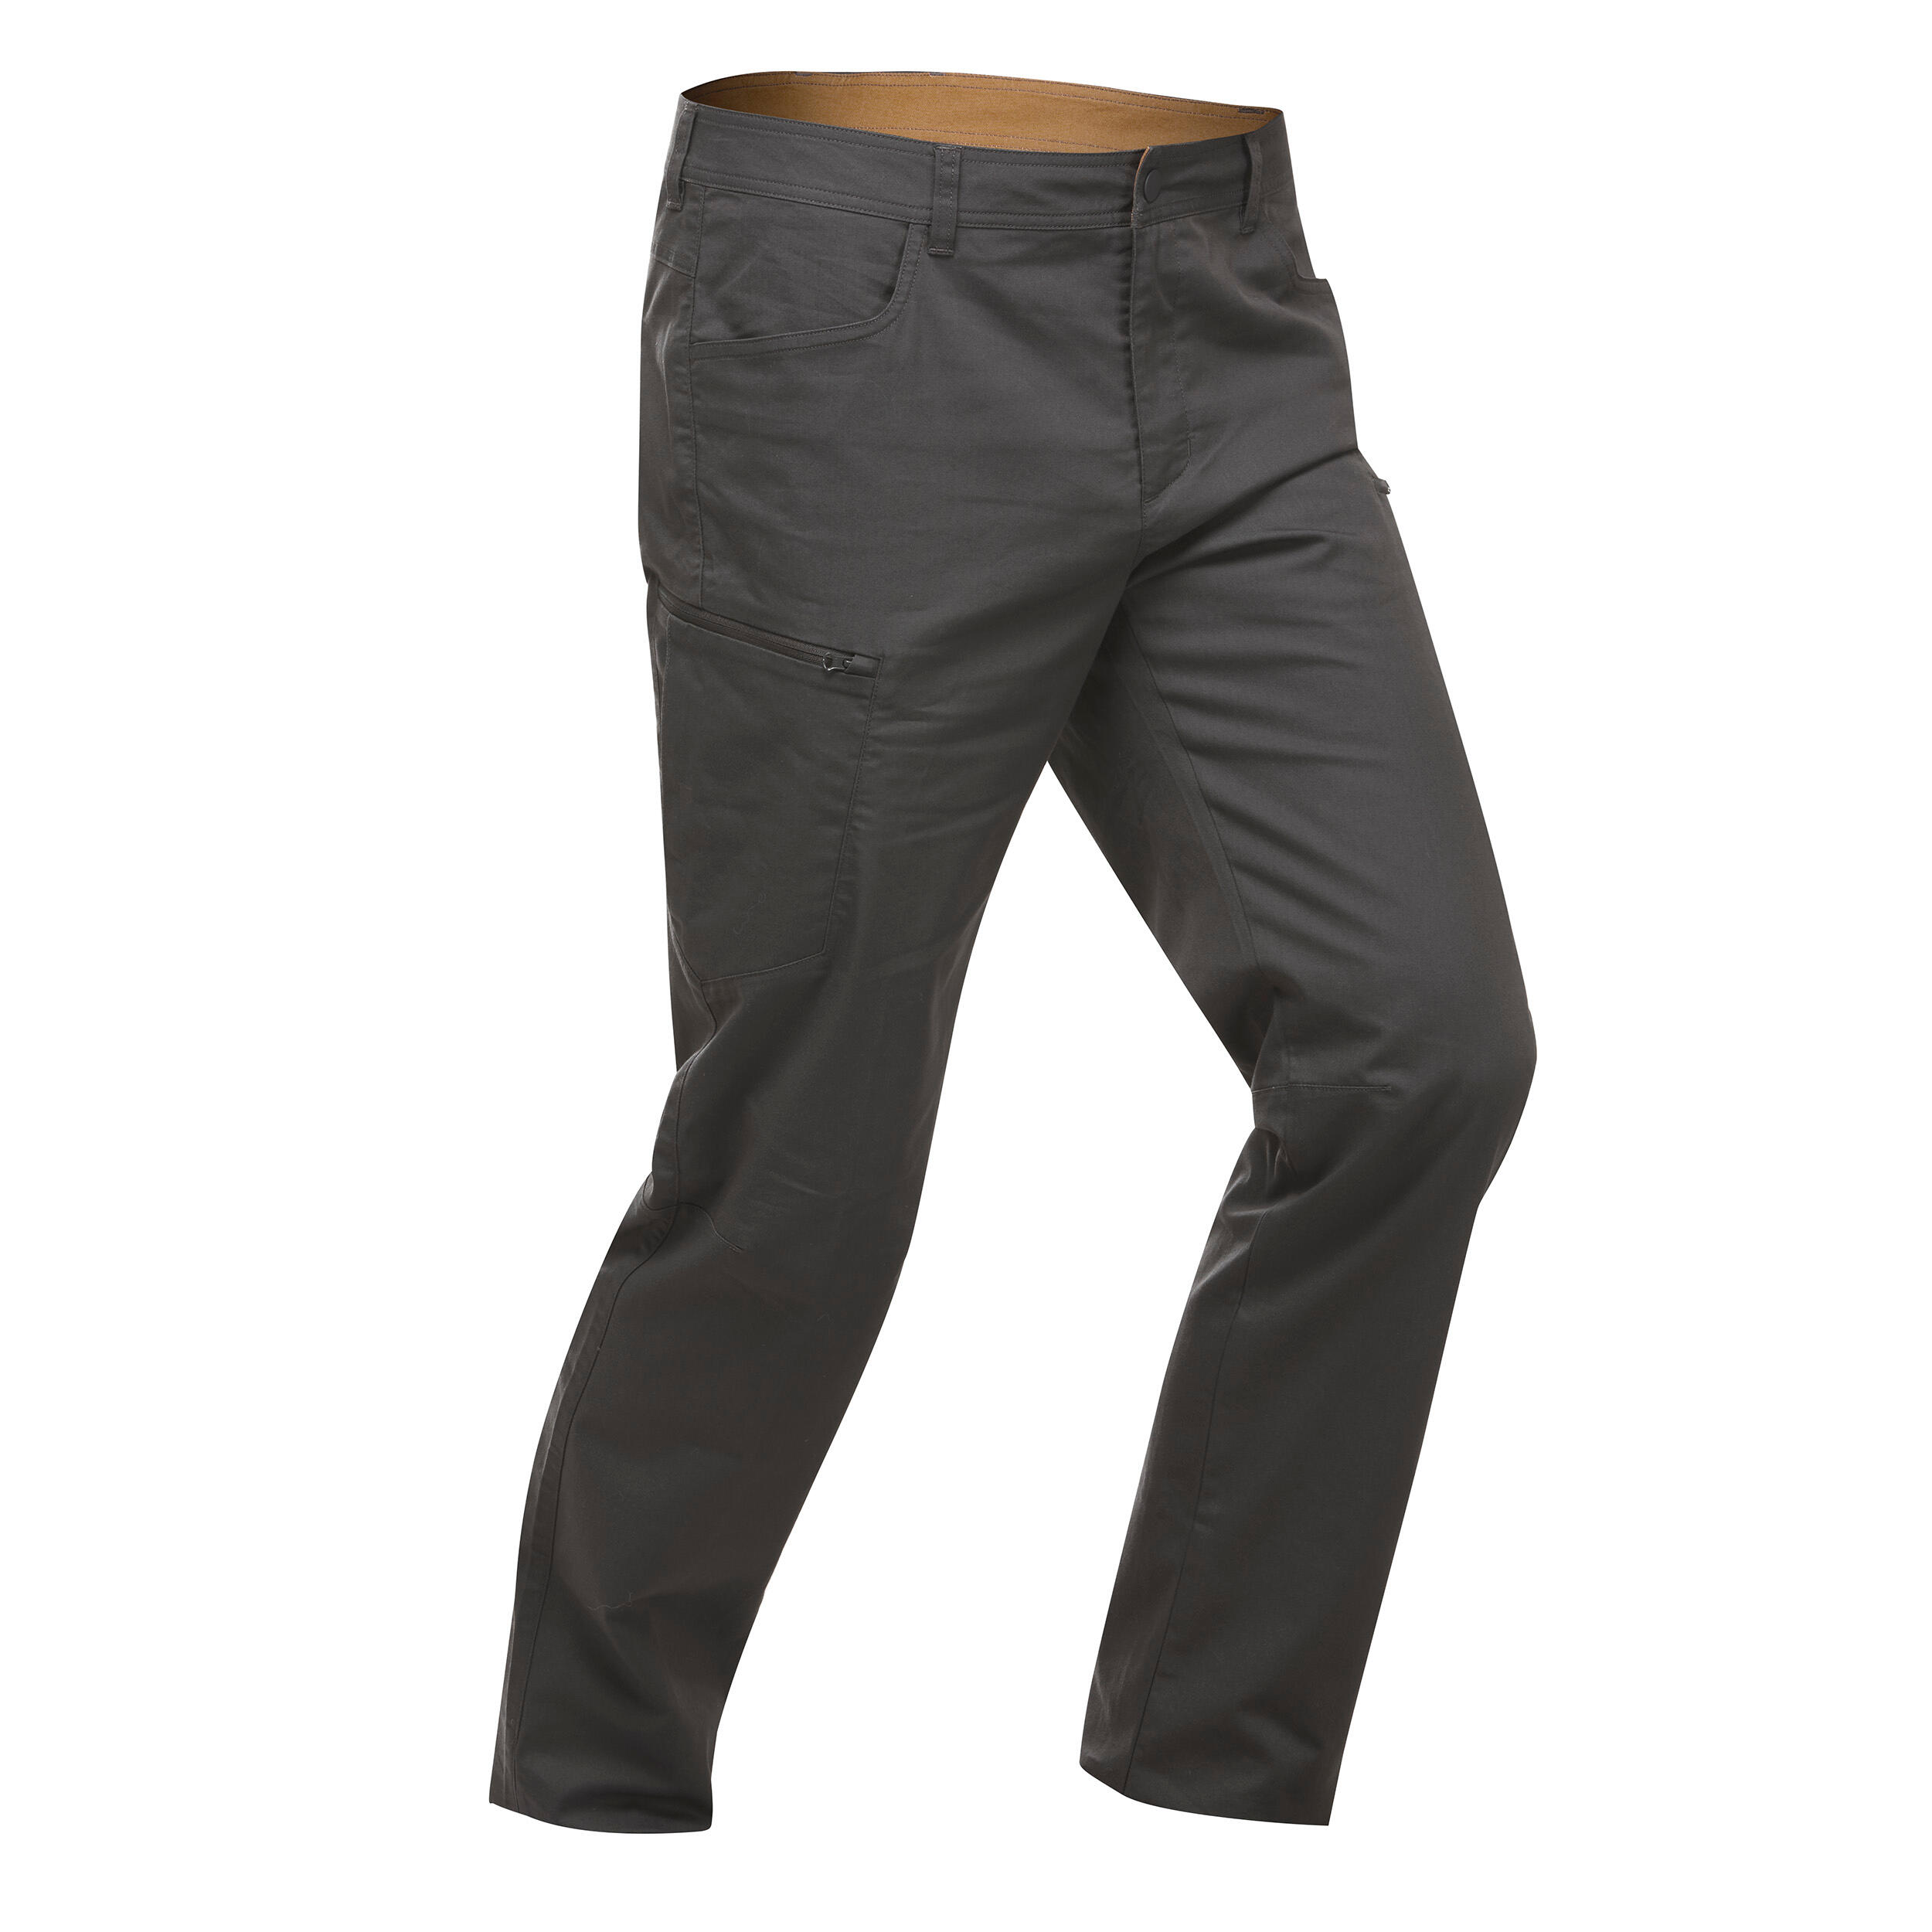 Men’s Hiking Pants - NH 500 Grey - QUECHUA